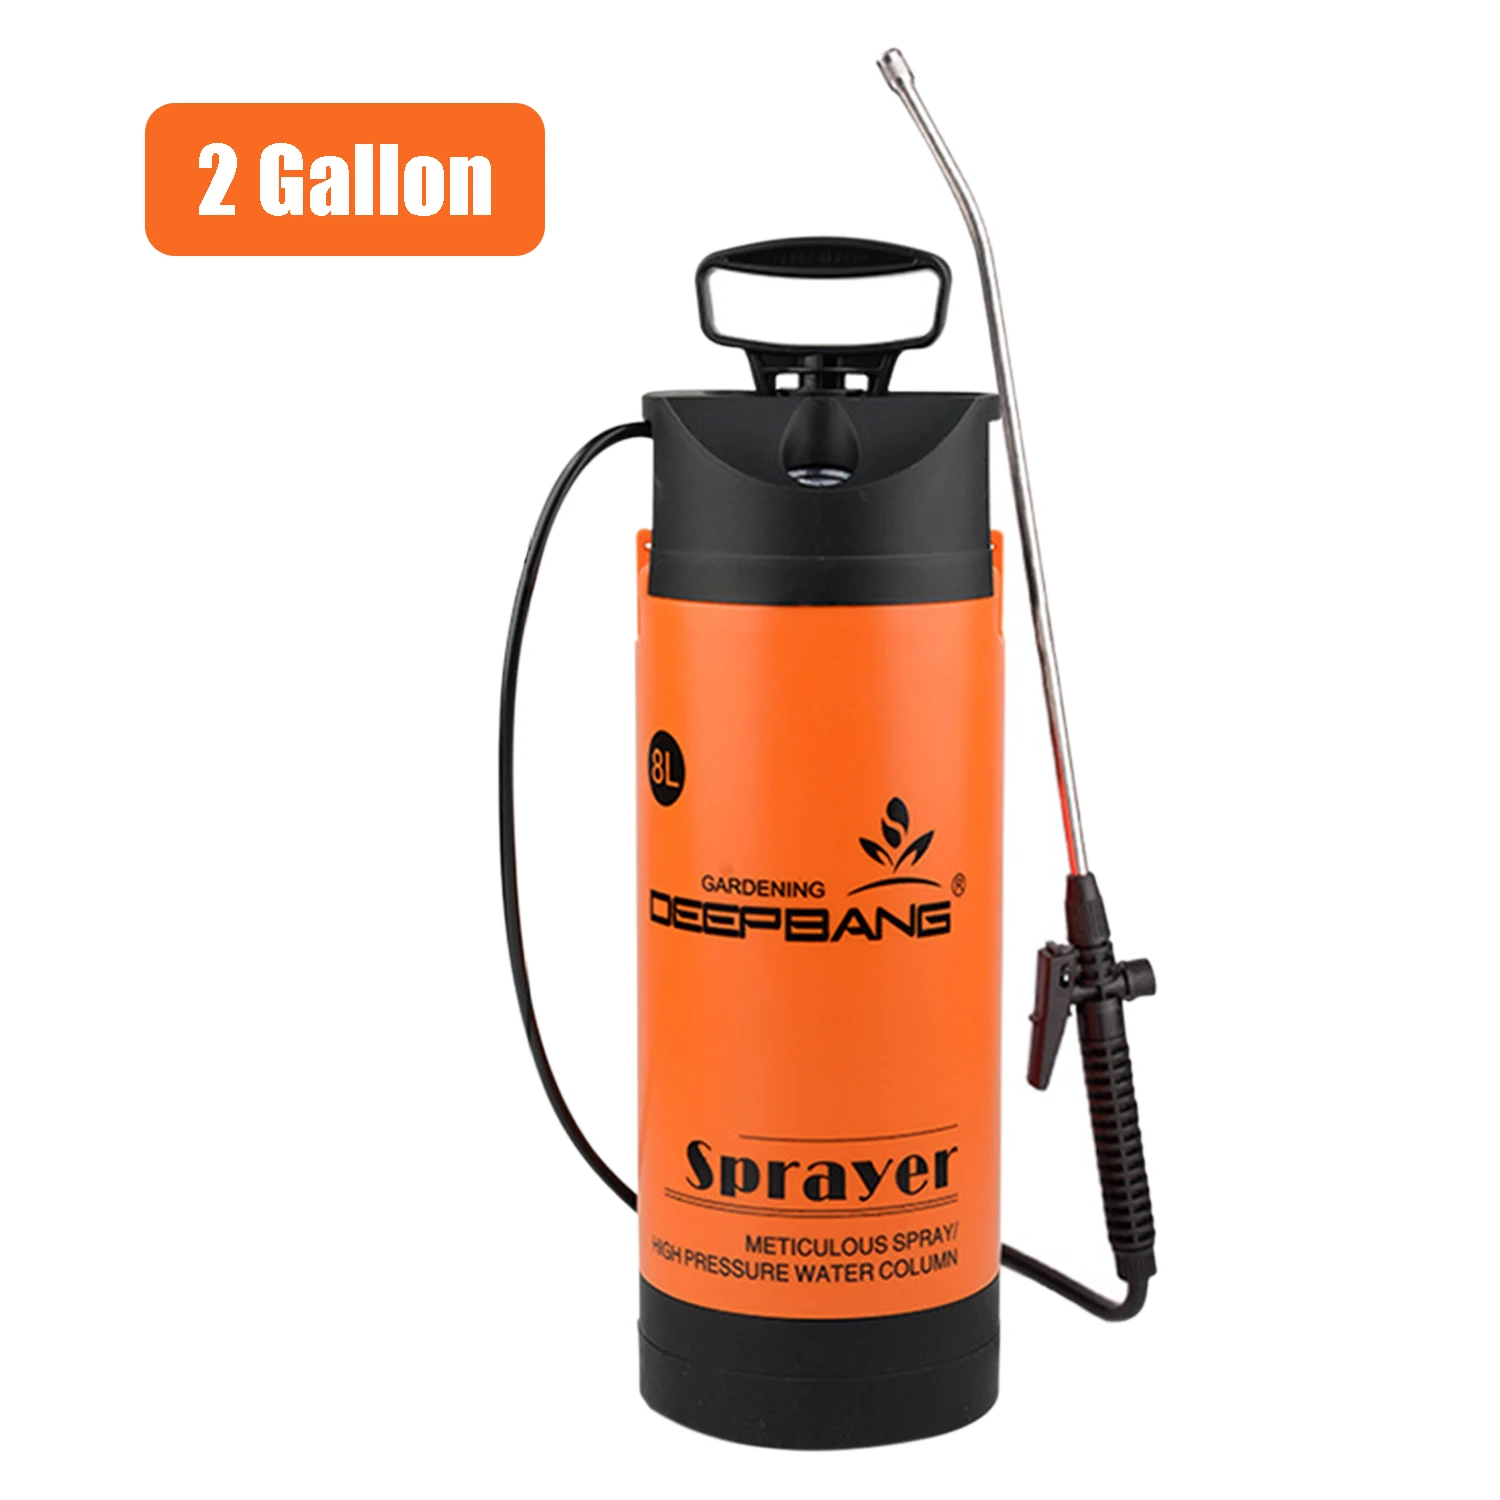 

2 Gallon Garden Pump Sprayer with Wand Pressure Gauge Handheld Water Sprayers for Watering Cleaning Fertilizing Pest Control